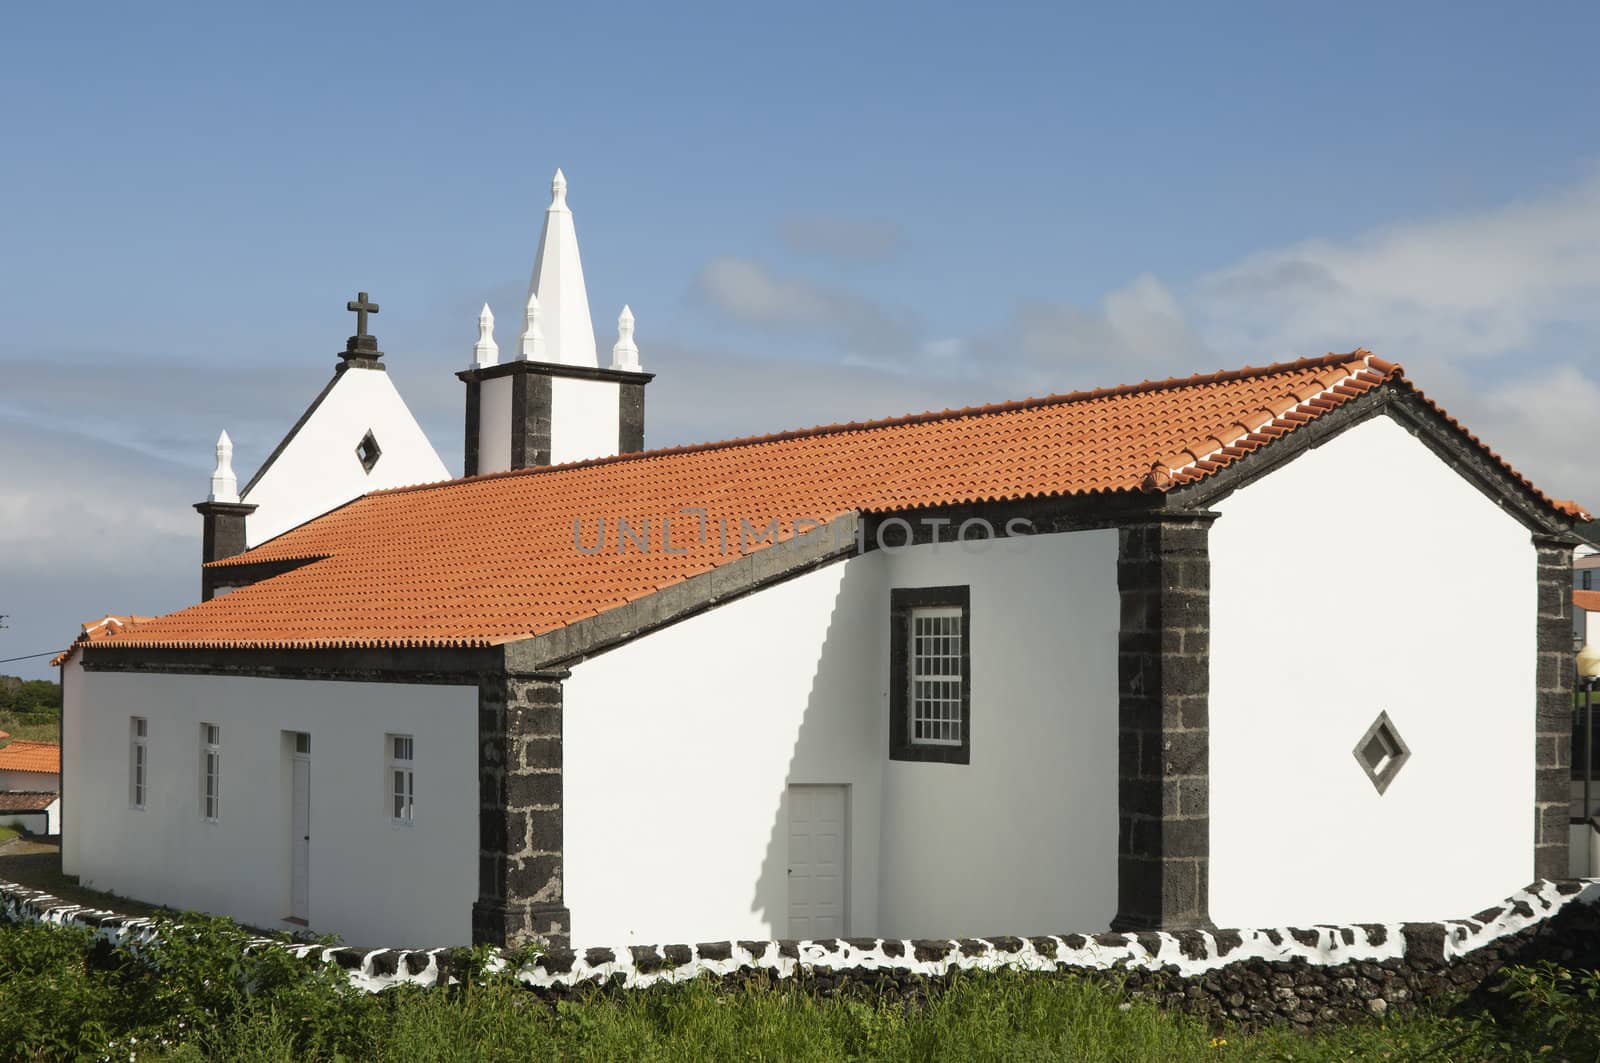 Church of St. Antao in Ribeirinha, Pico islnd, Azores